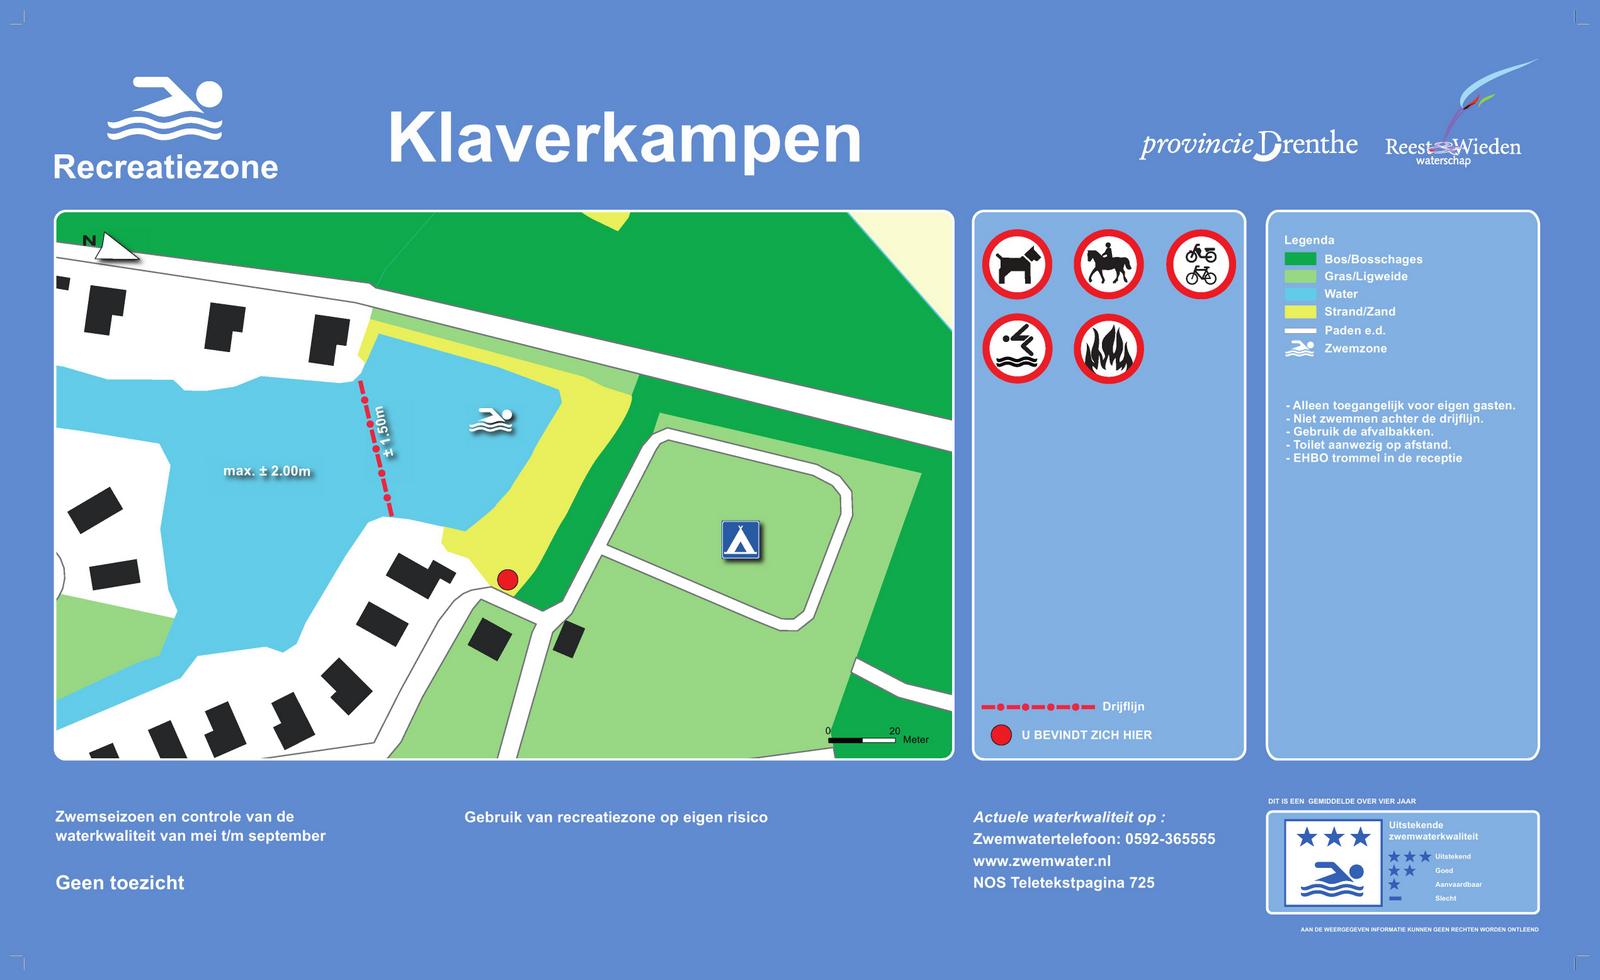 The information board at the swimming location De Klaverkampen